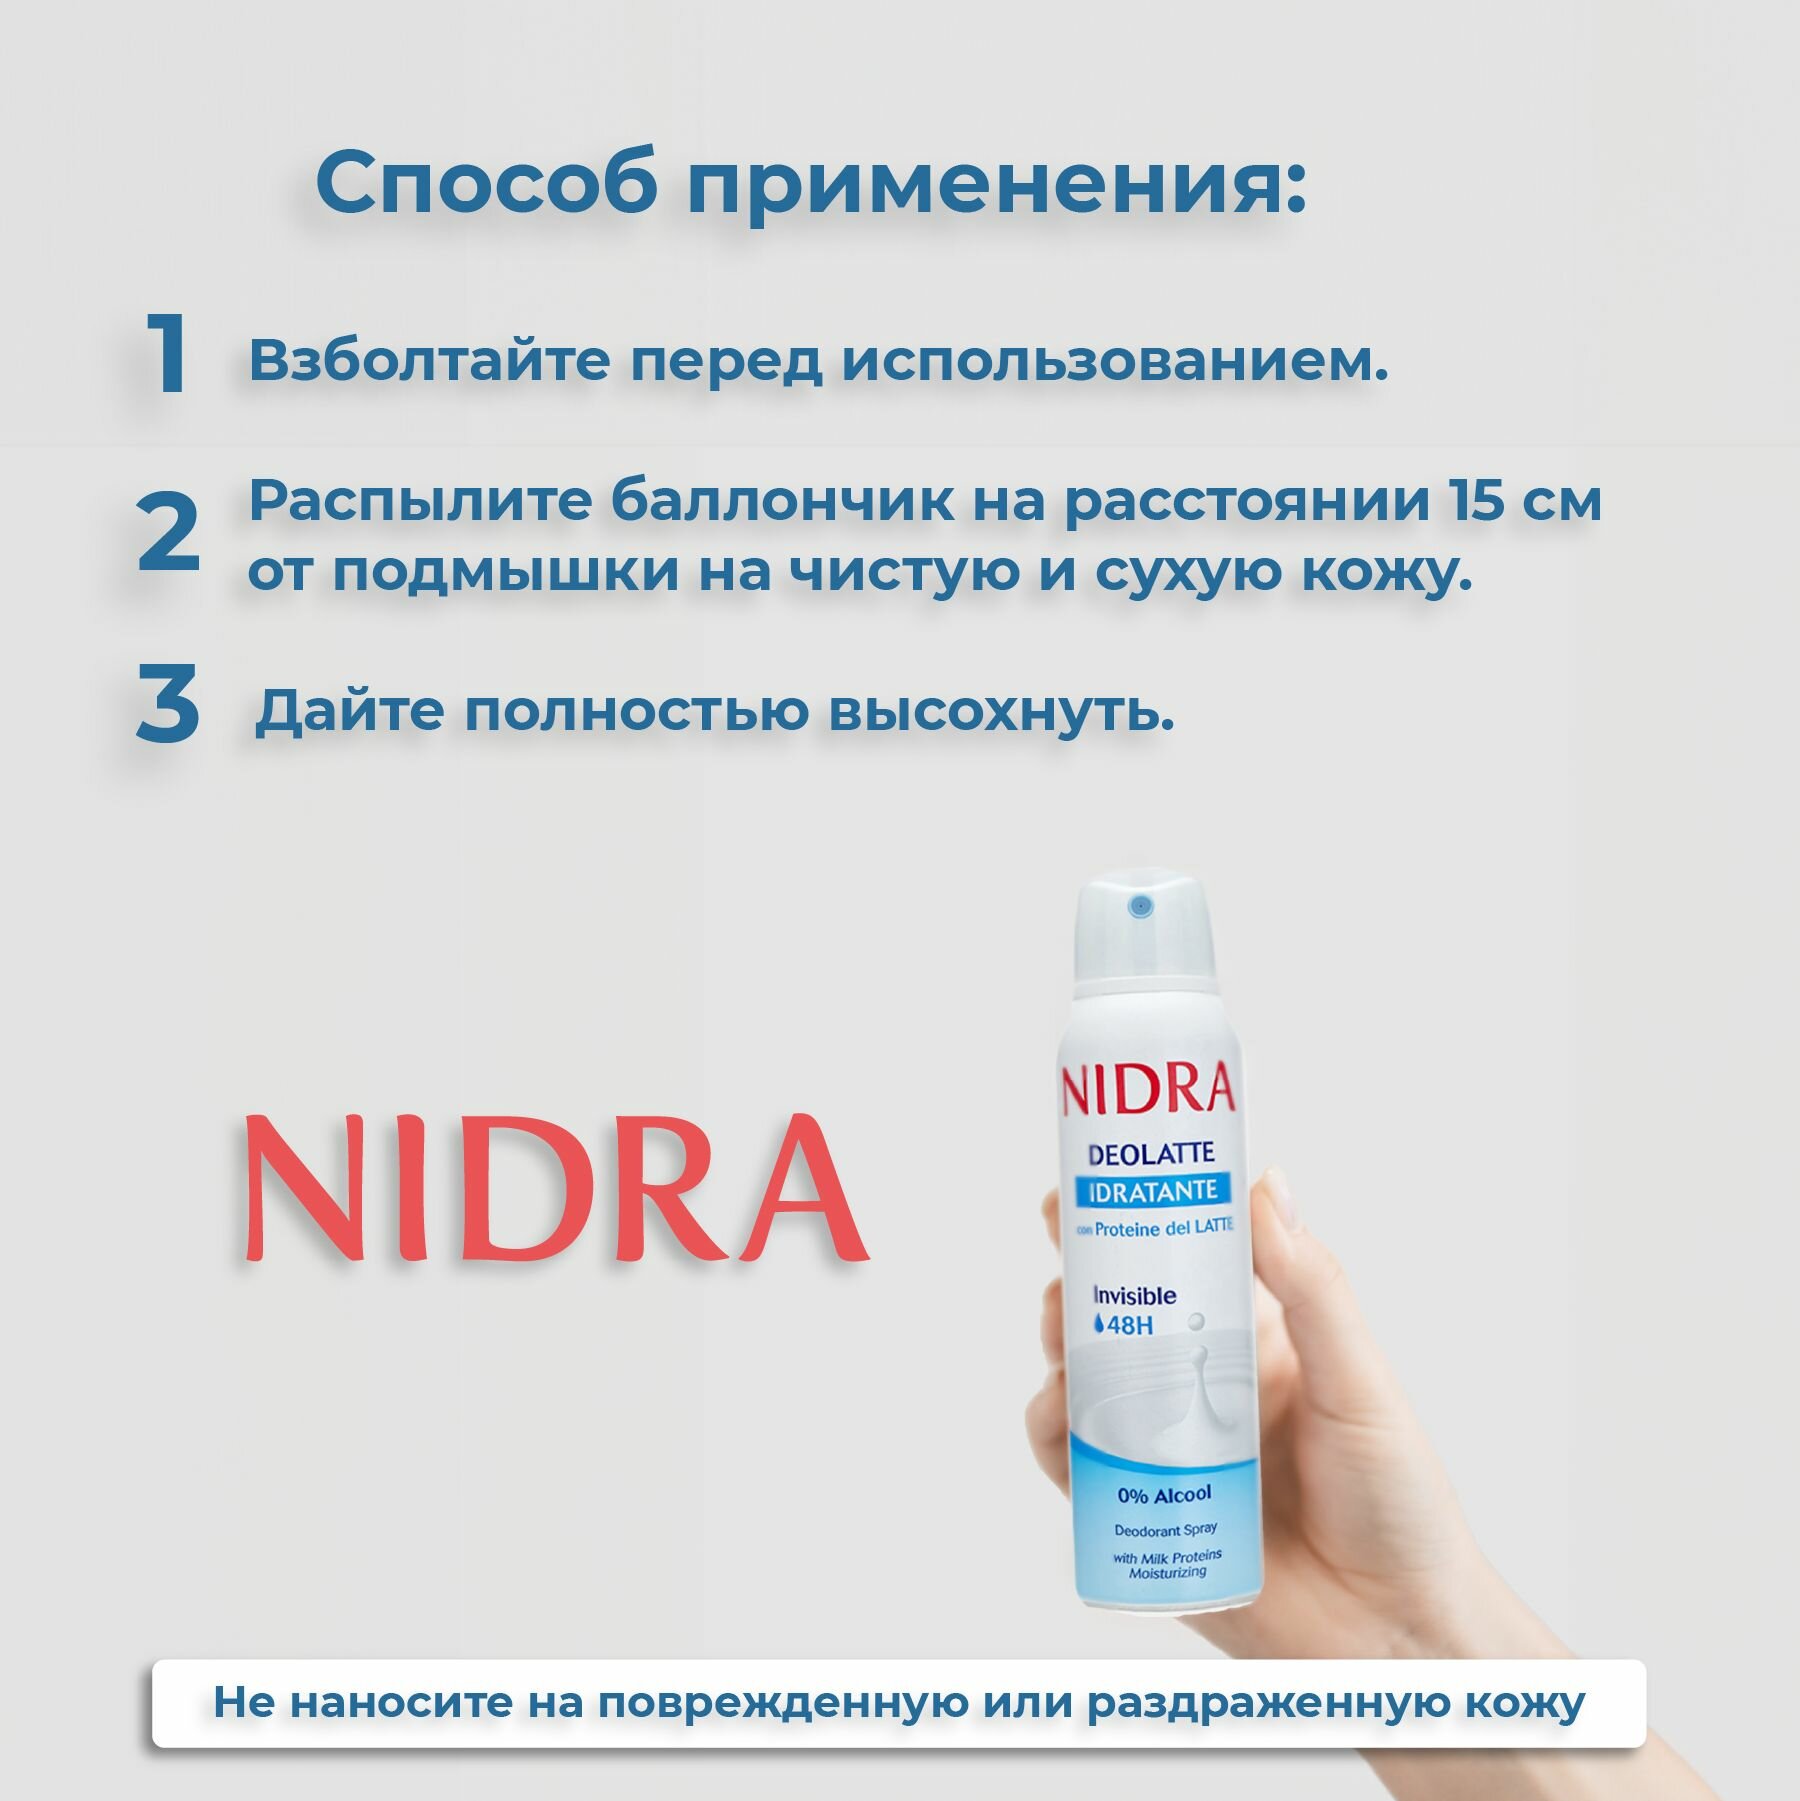 Nidra Женский дезодорант аэрозоль увлажняющий с молочными протеинами 150 мл